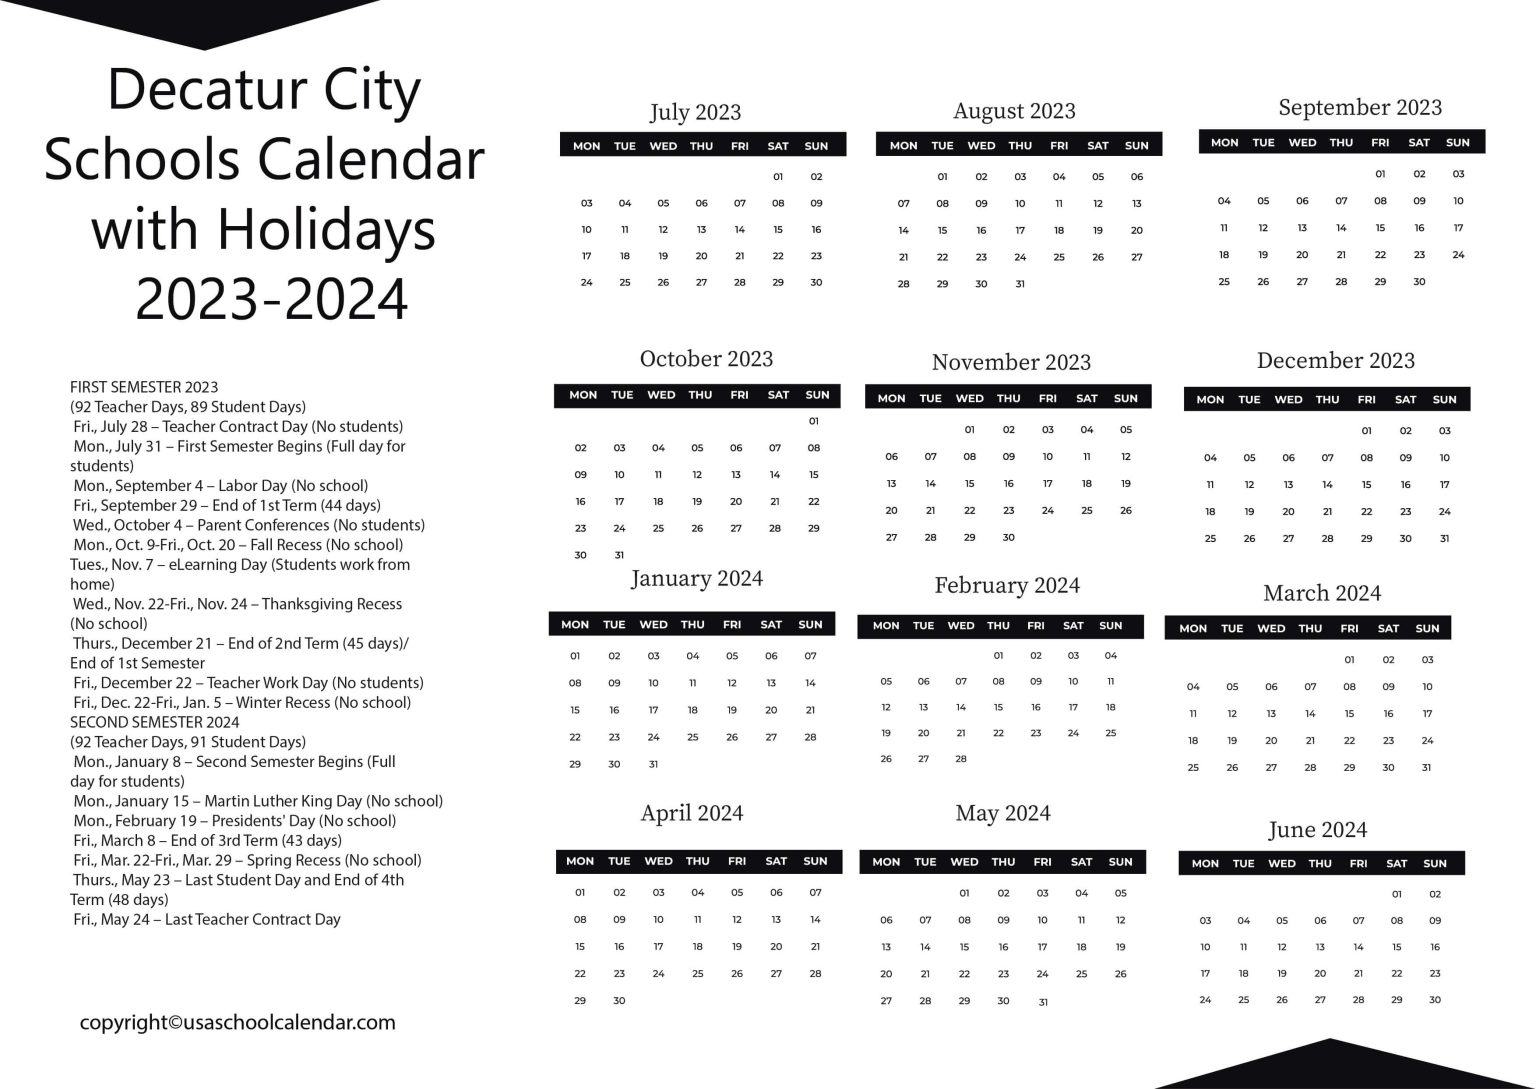 Decatur City Schools Calendar with Holidays 2023 2024